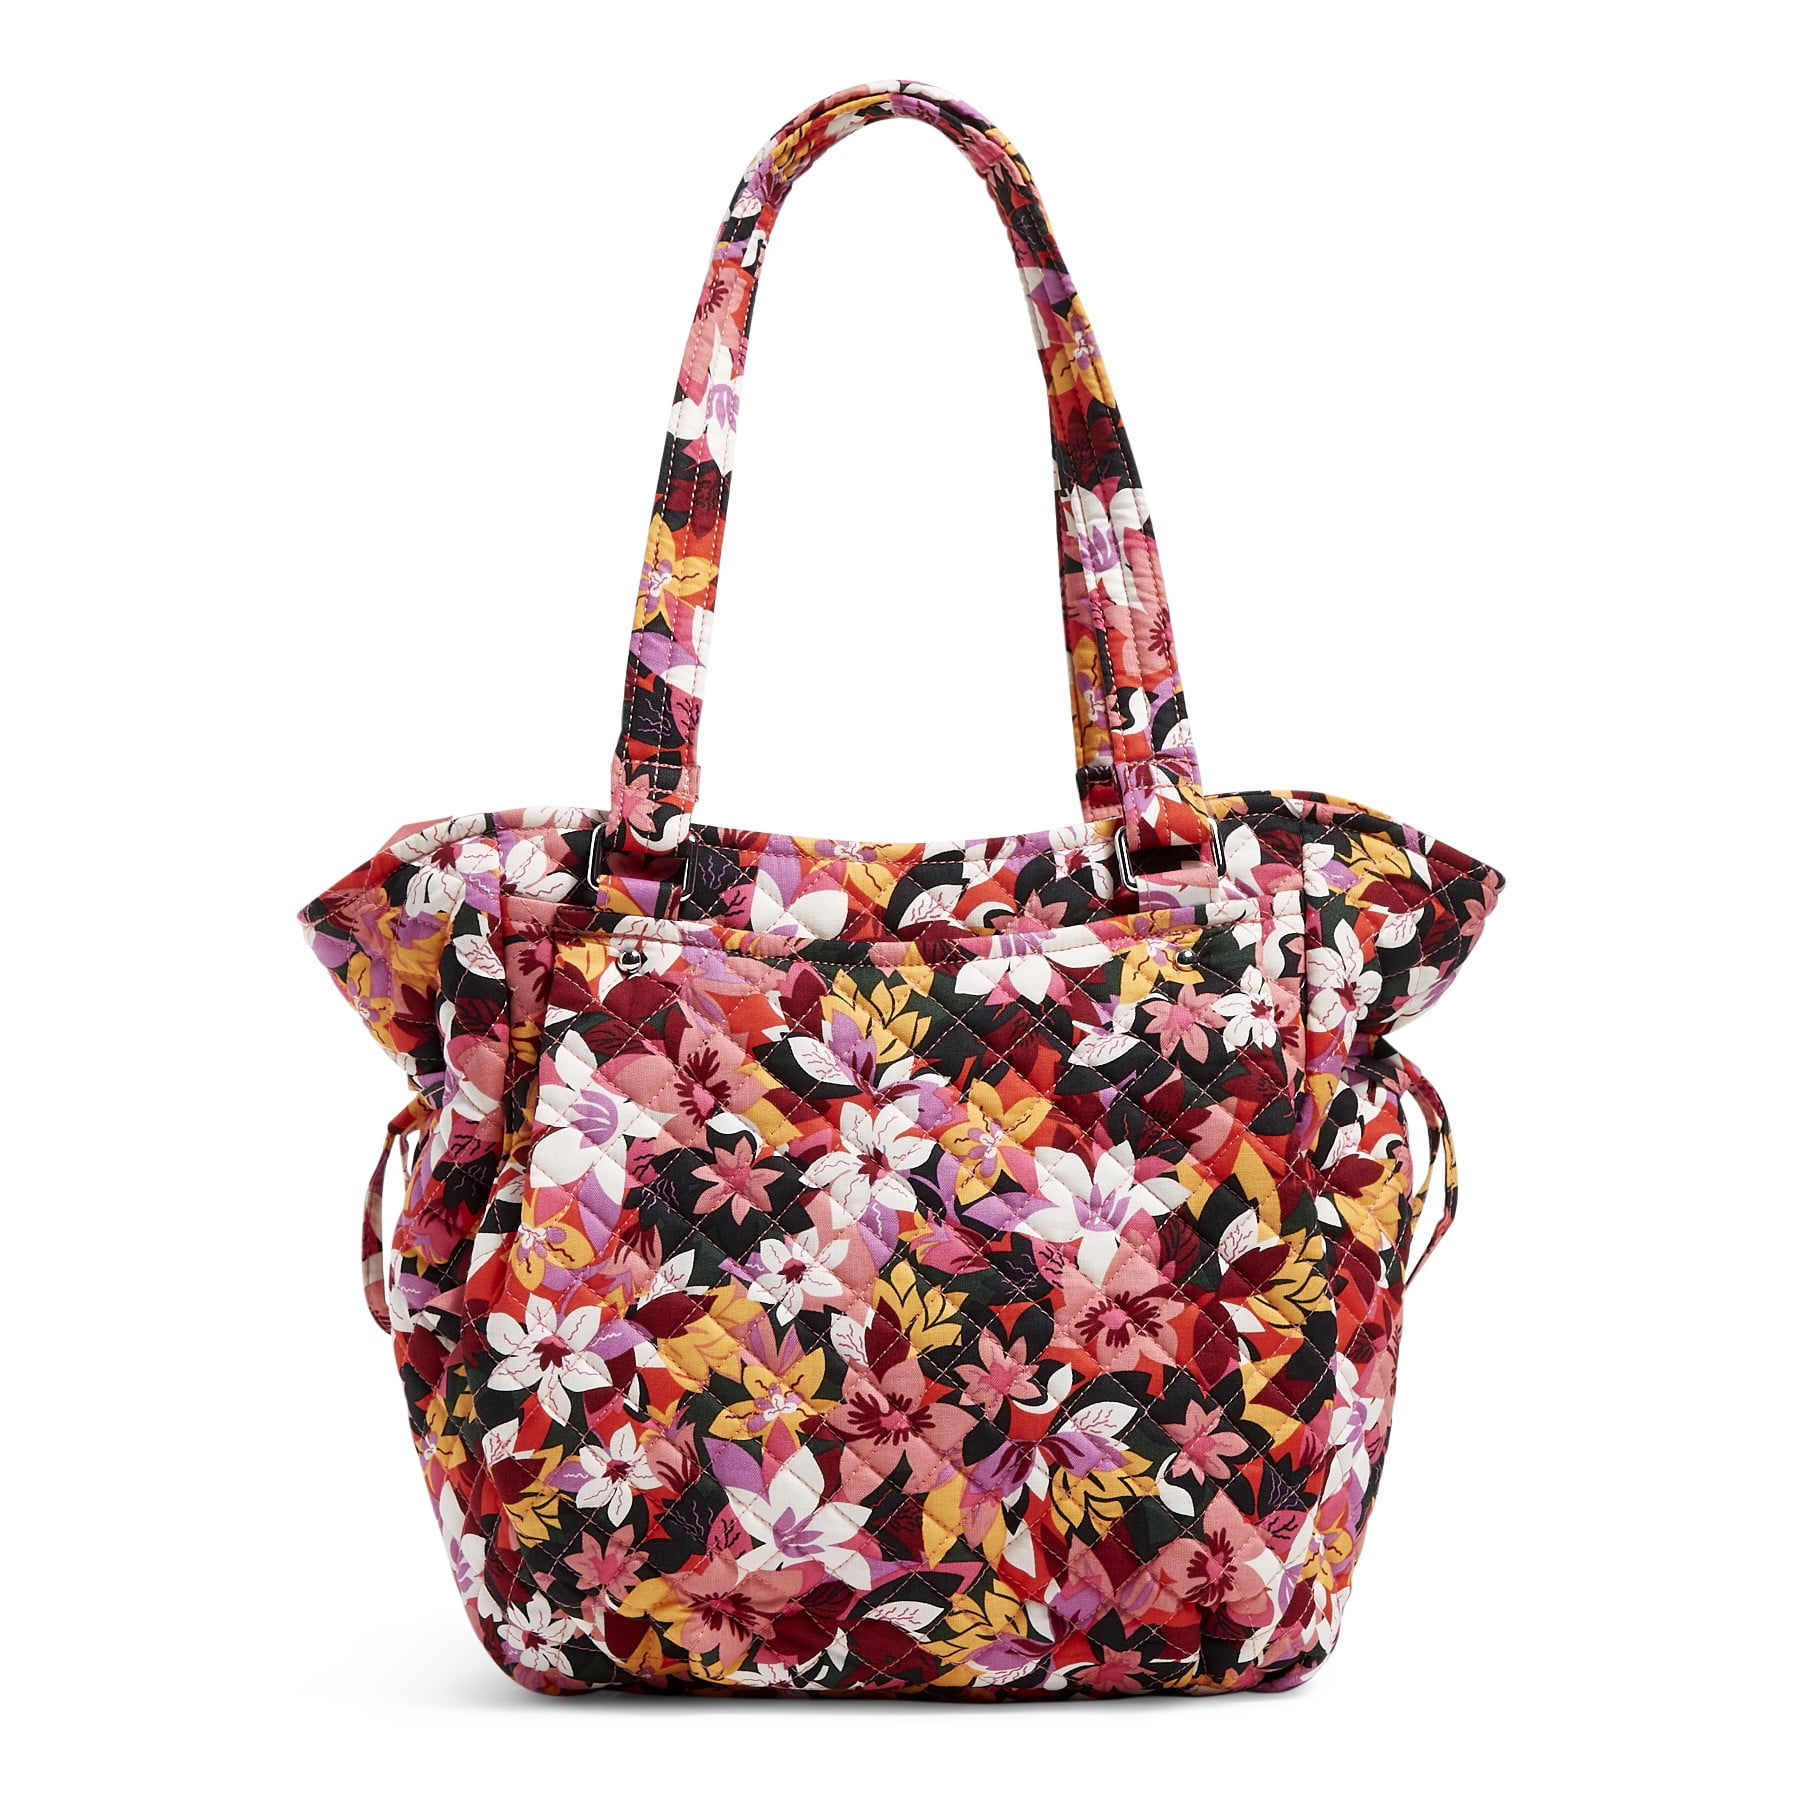 Premium Soft Glitter Floral Satchel Top Handle Tote Bag Handbag